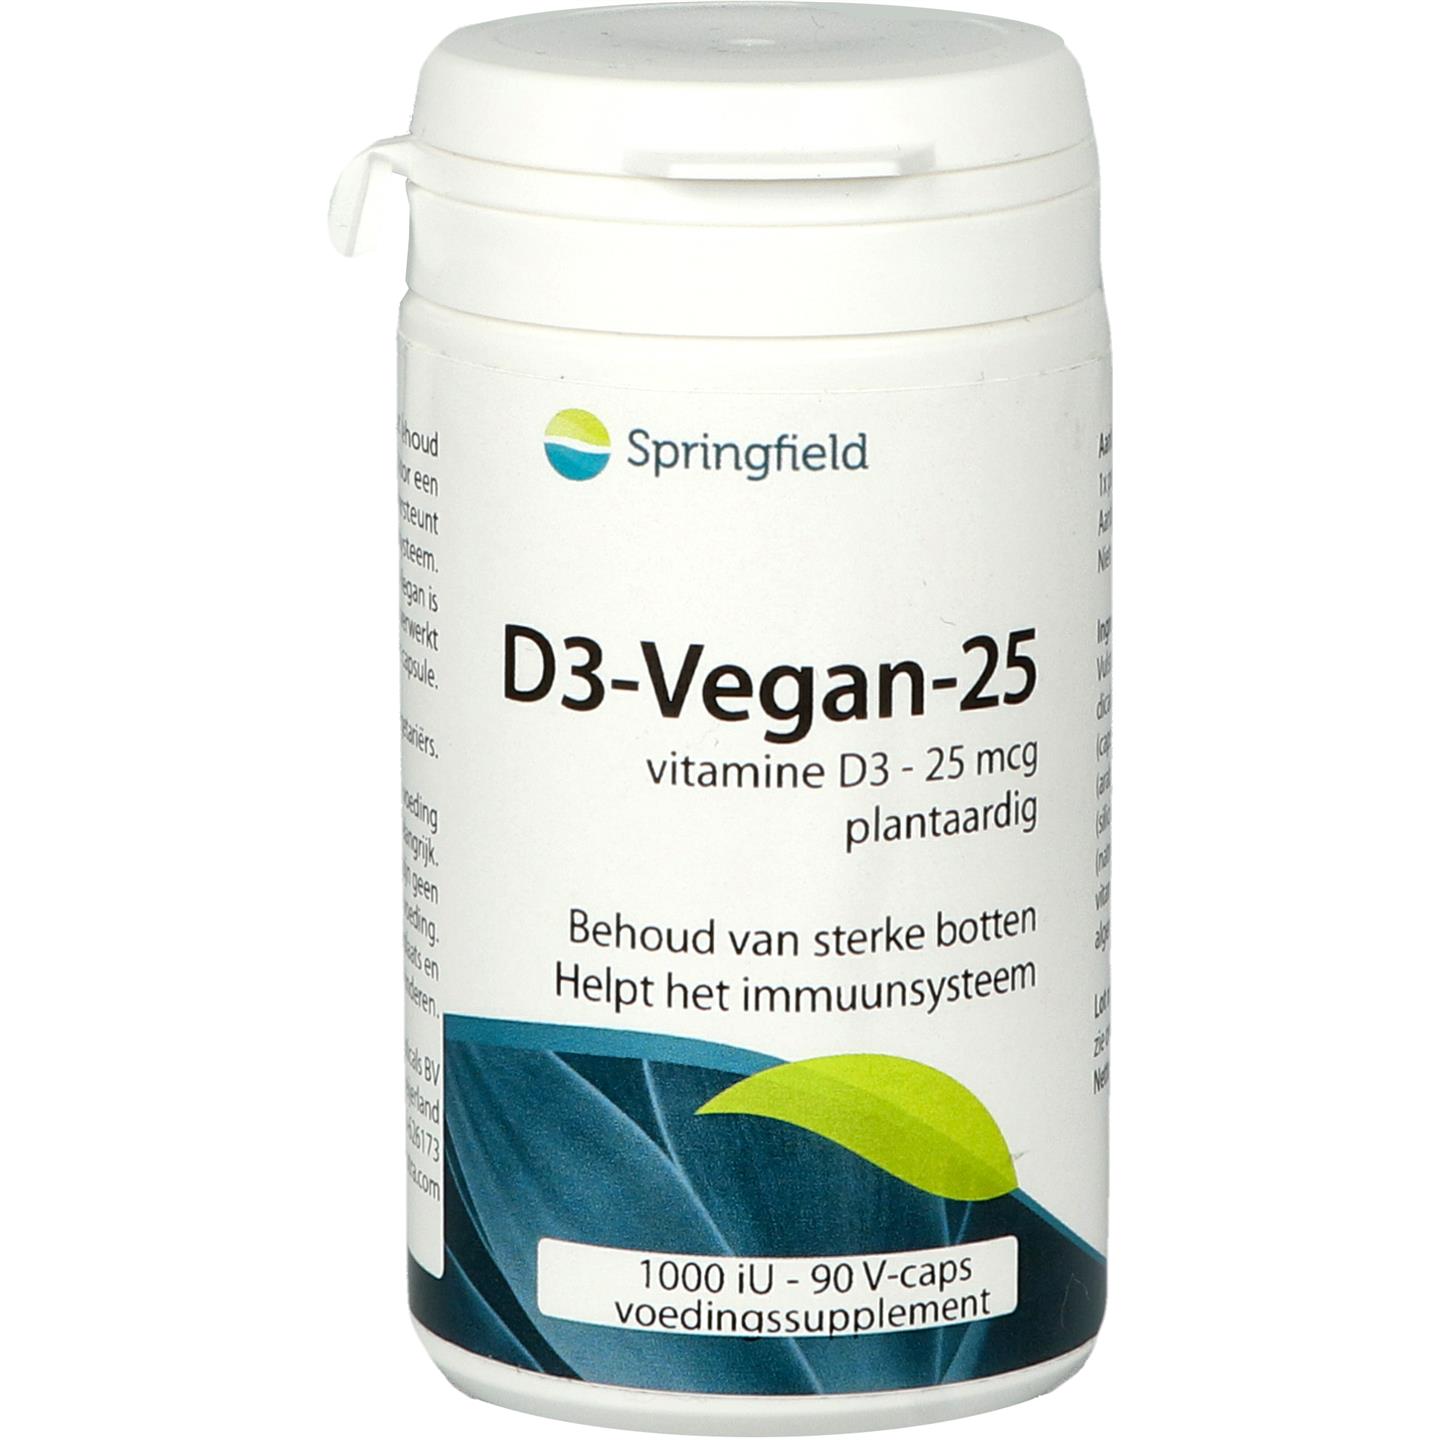 D3-Vegan-25